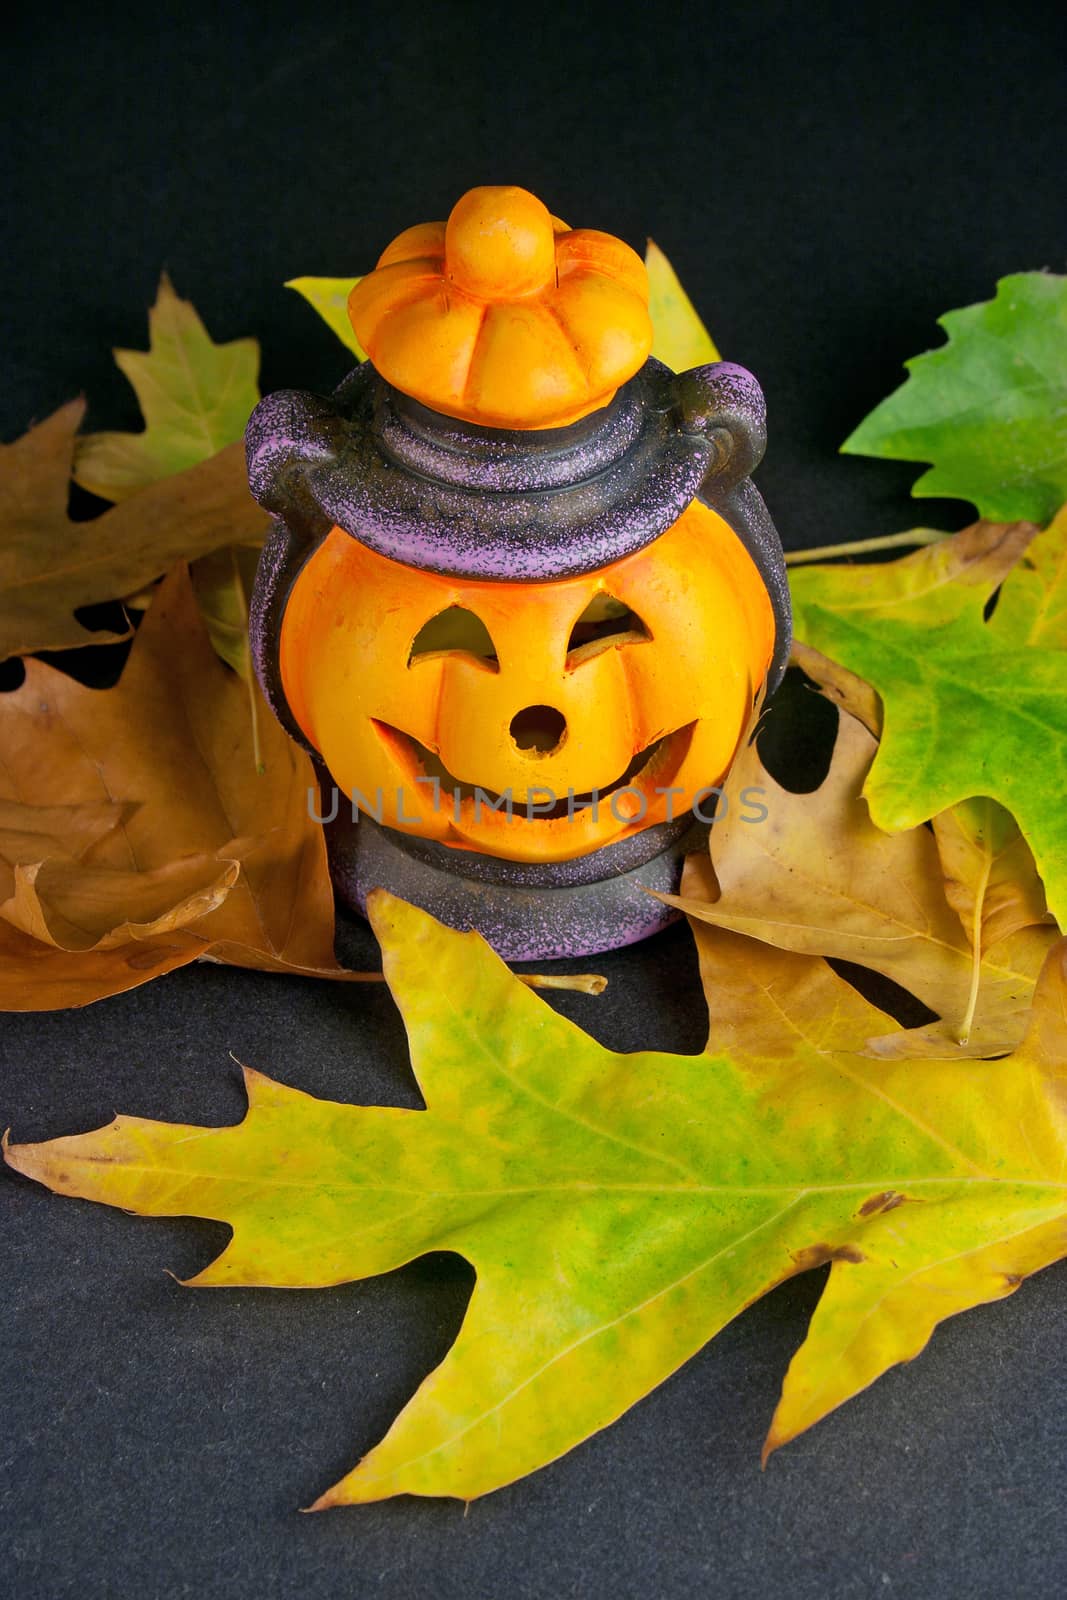 Halloween Lantern and Leafs on Black Background by Kartouchken